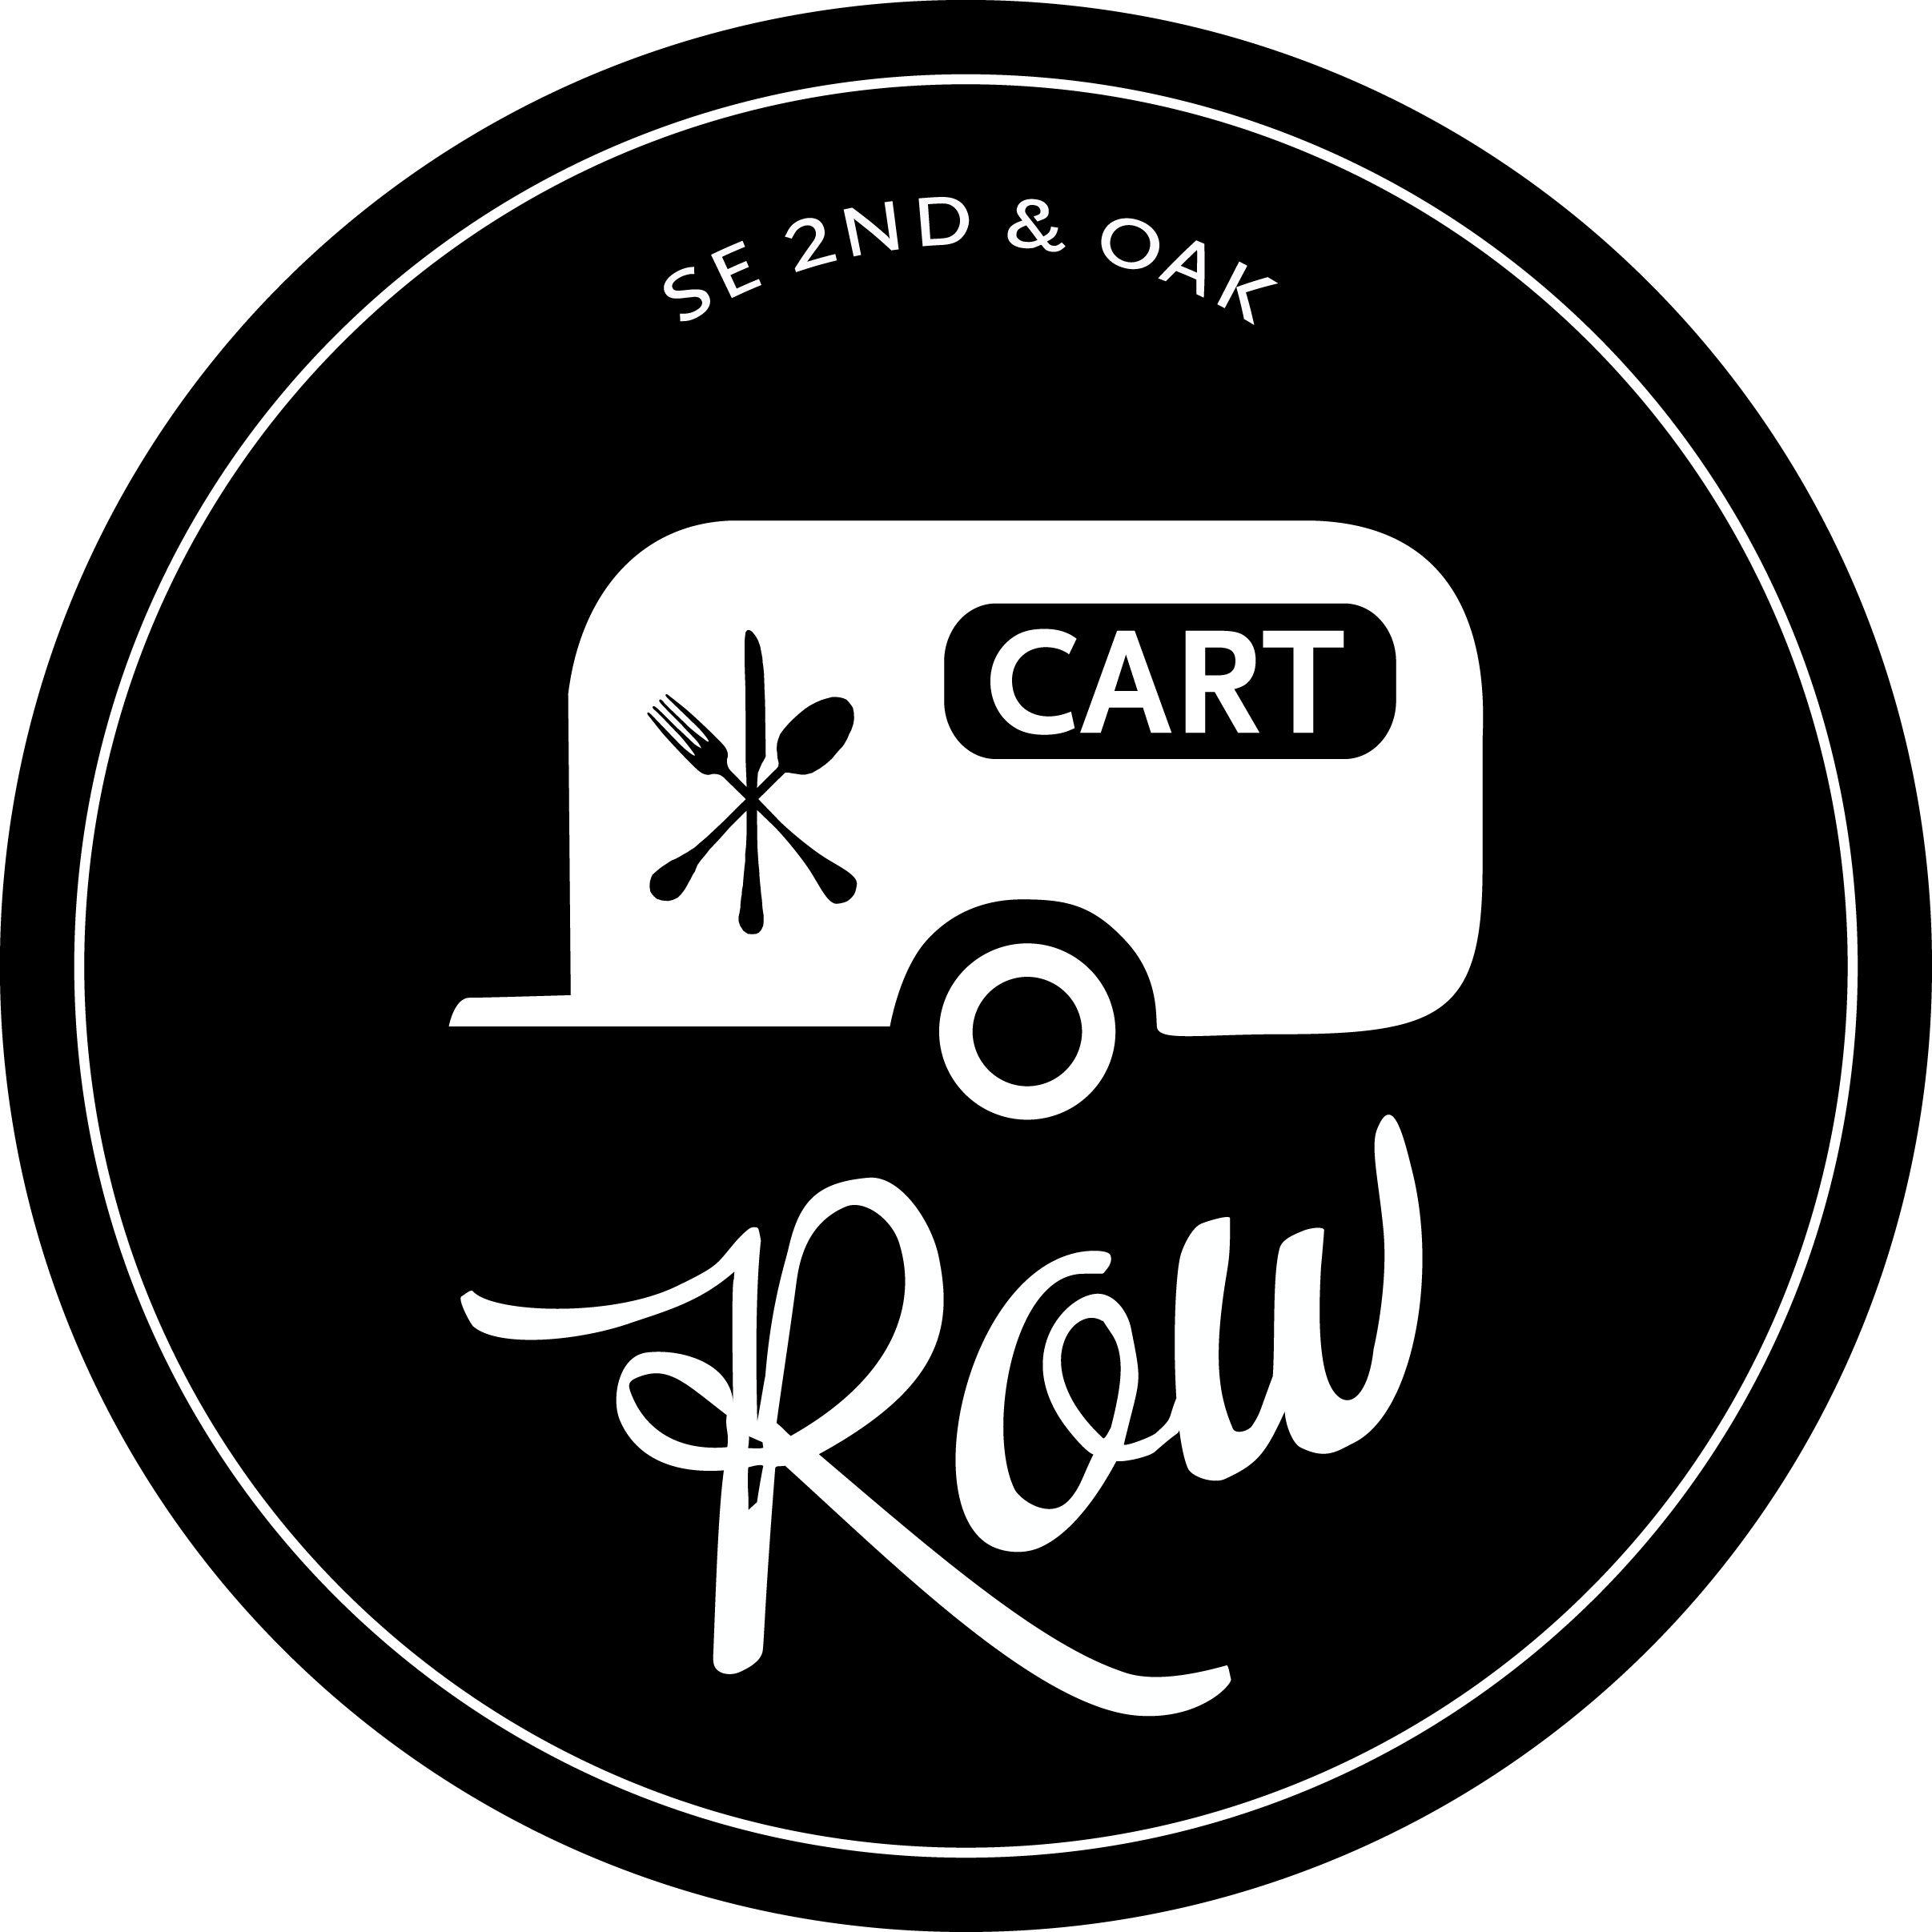 Food Cart Logo - Cart Row | Kindred